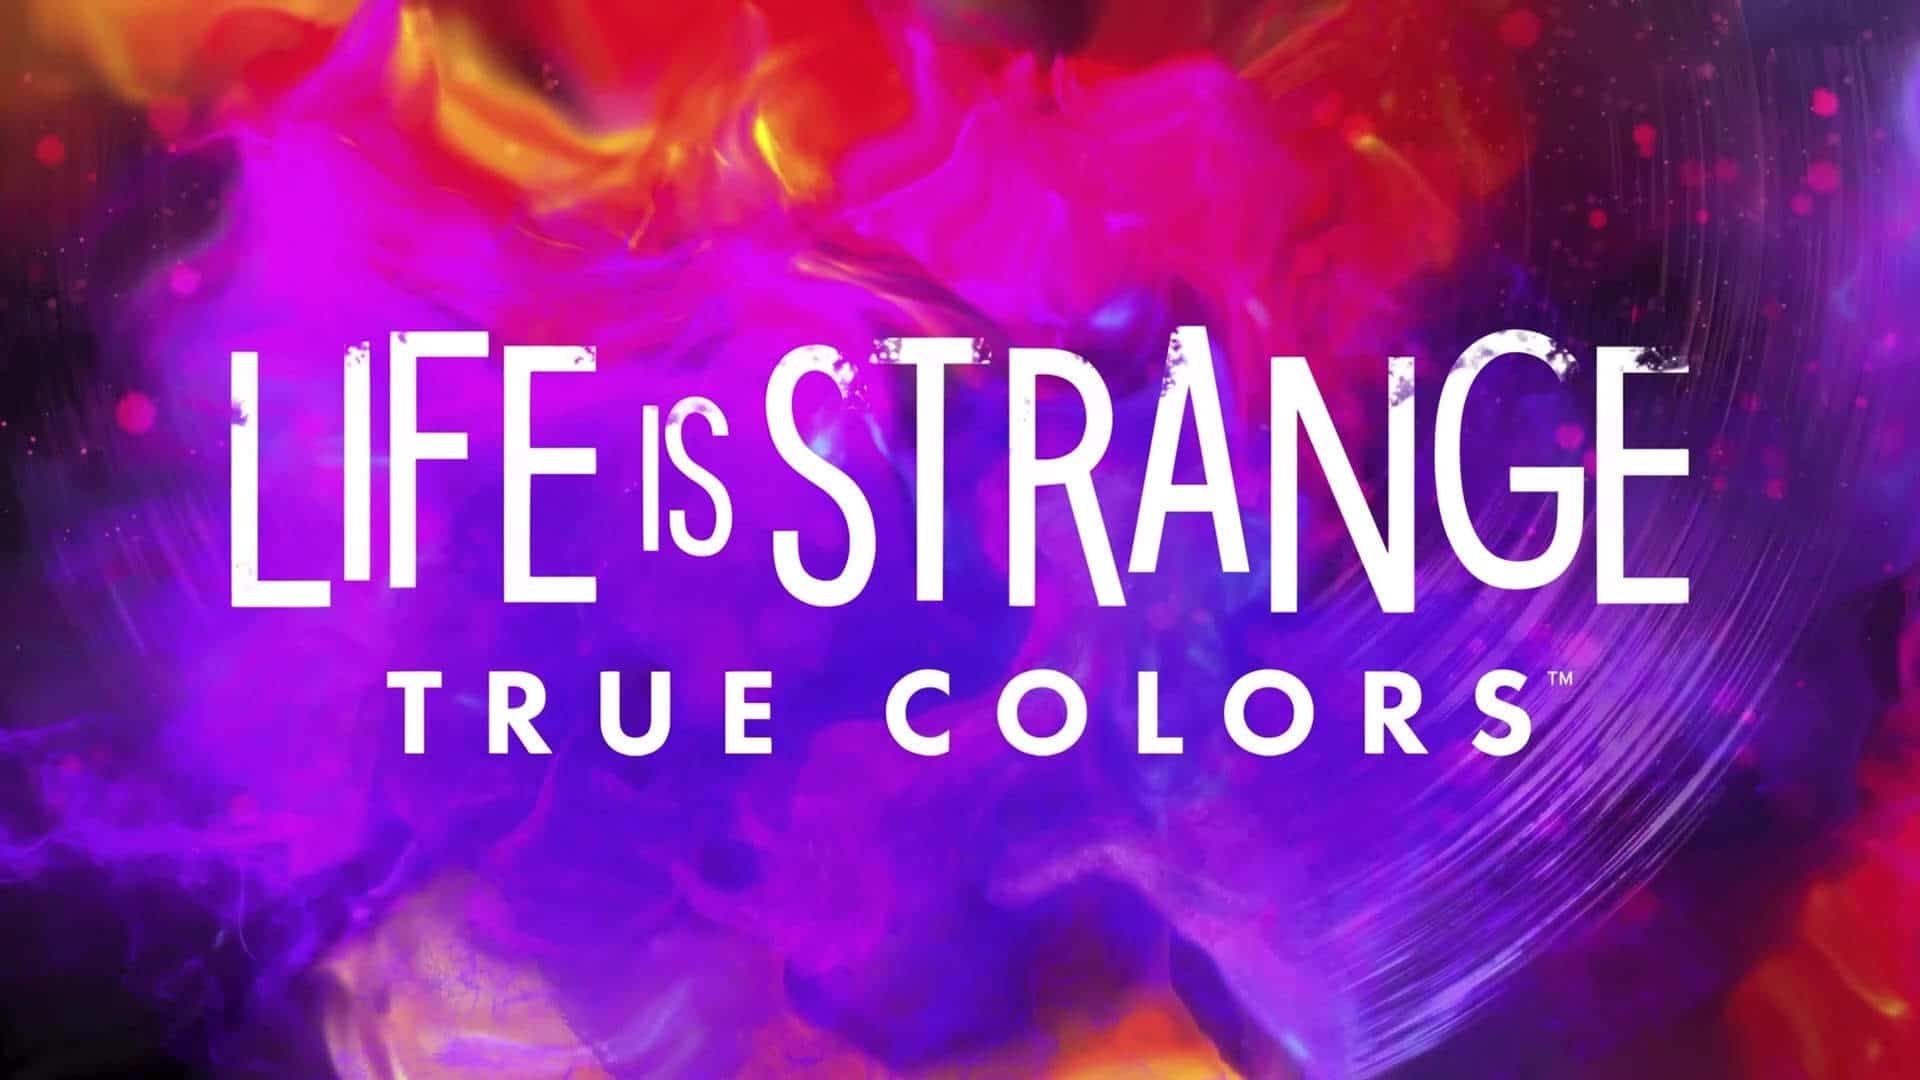 Life is Strange True Colors,GamersRD